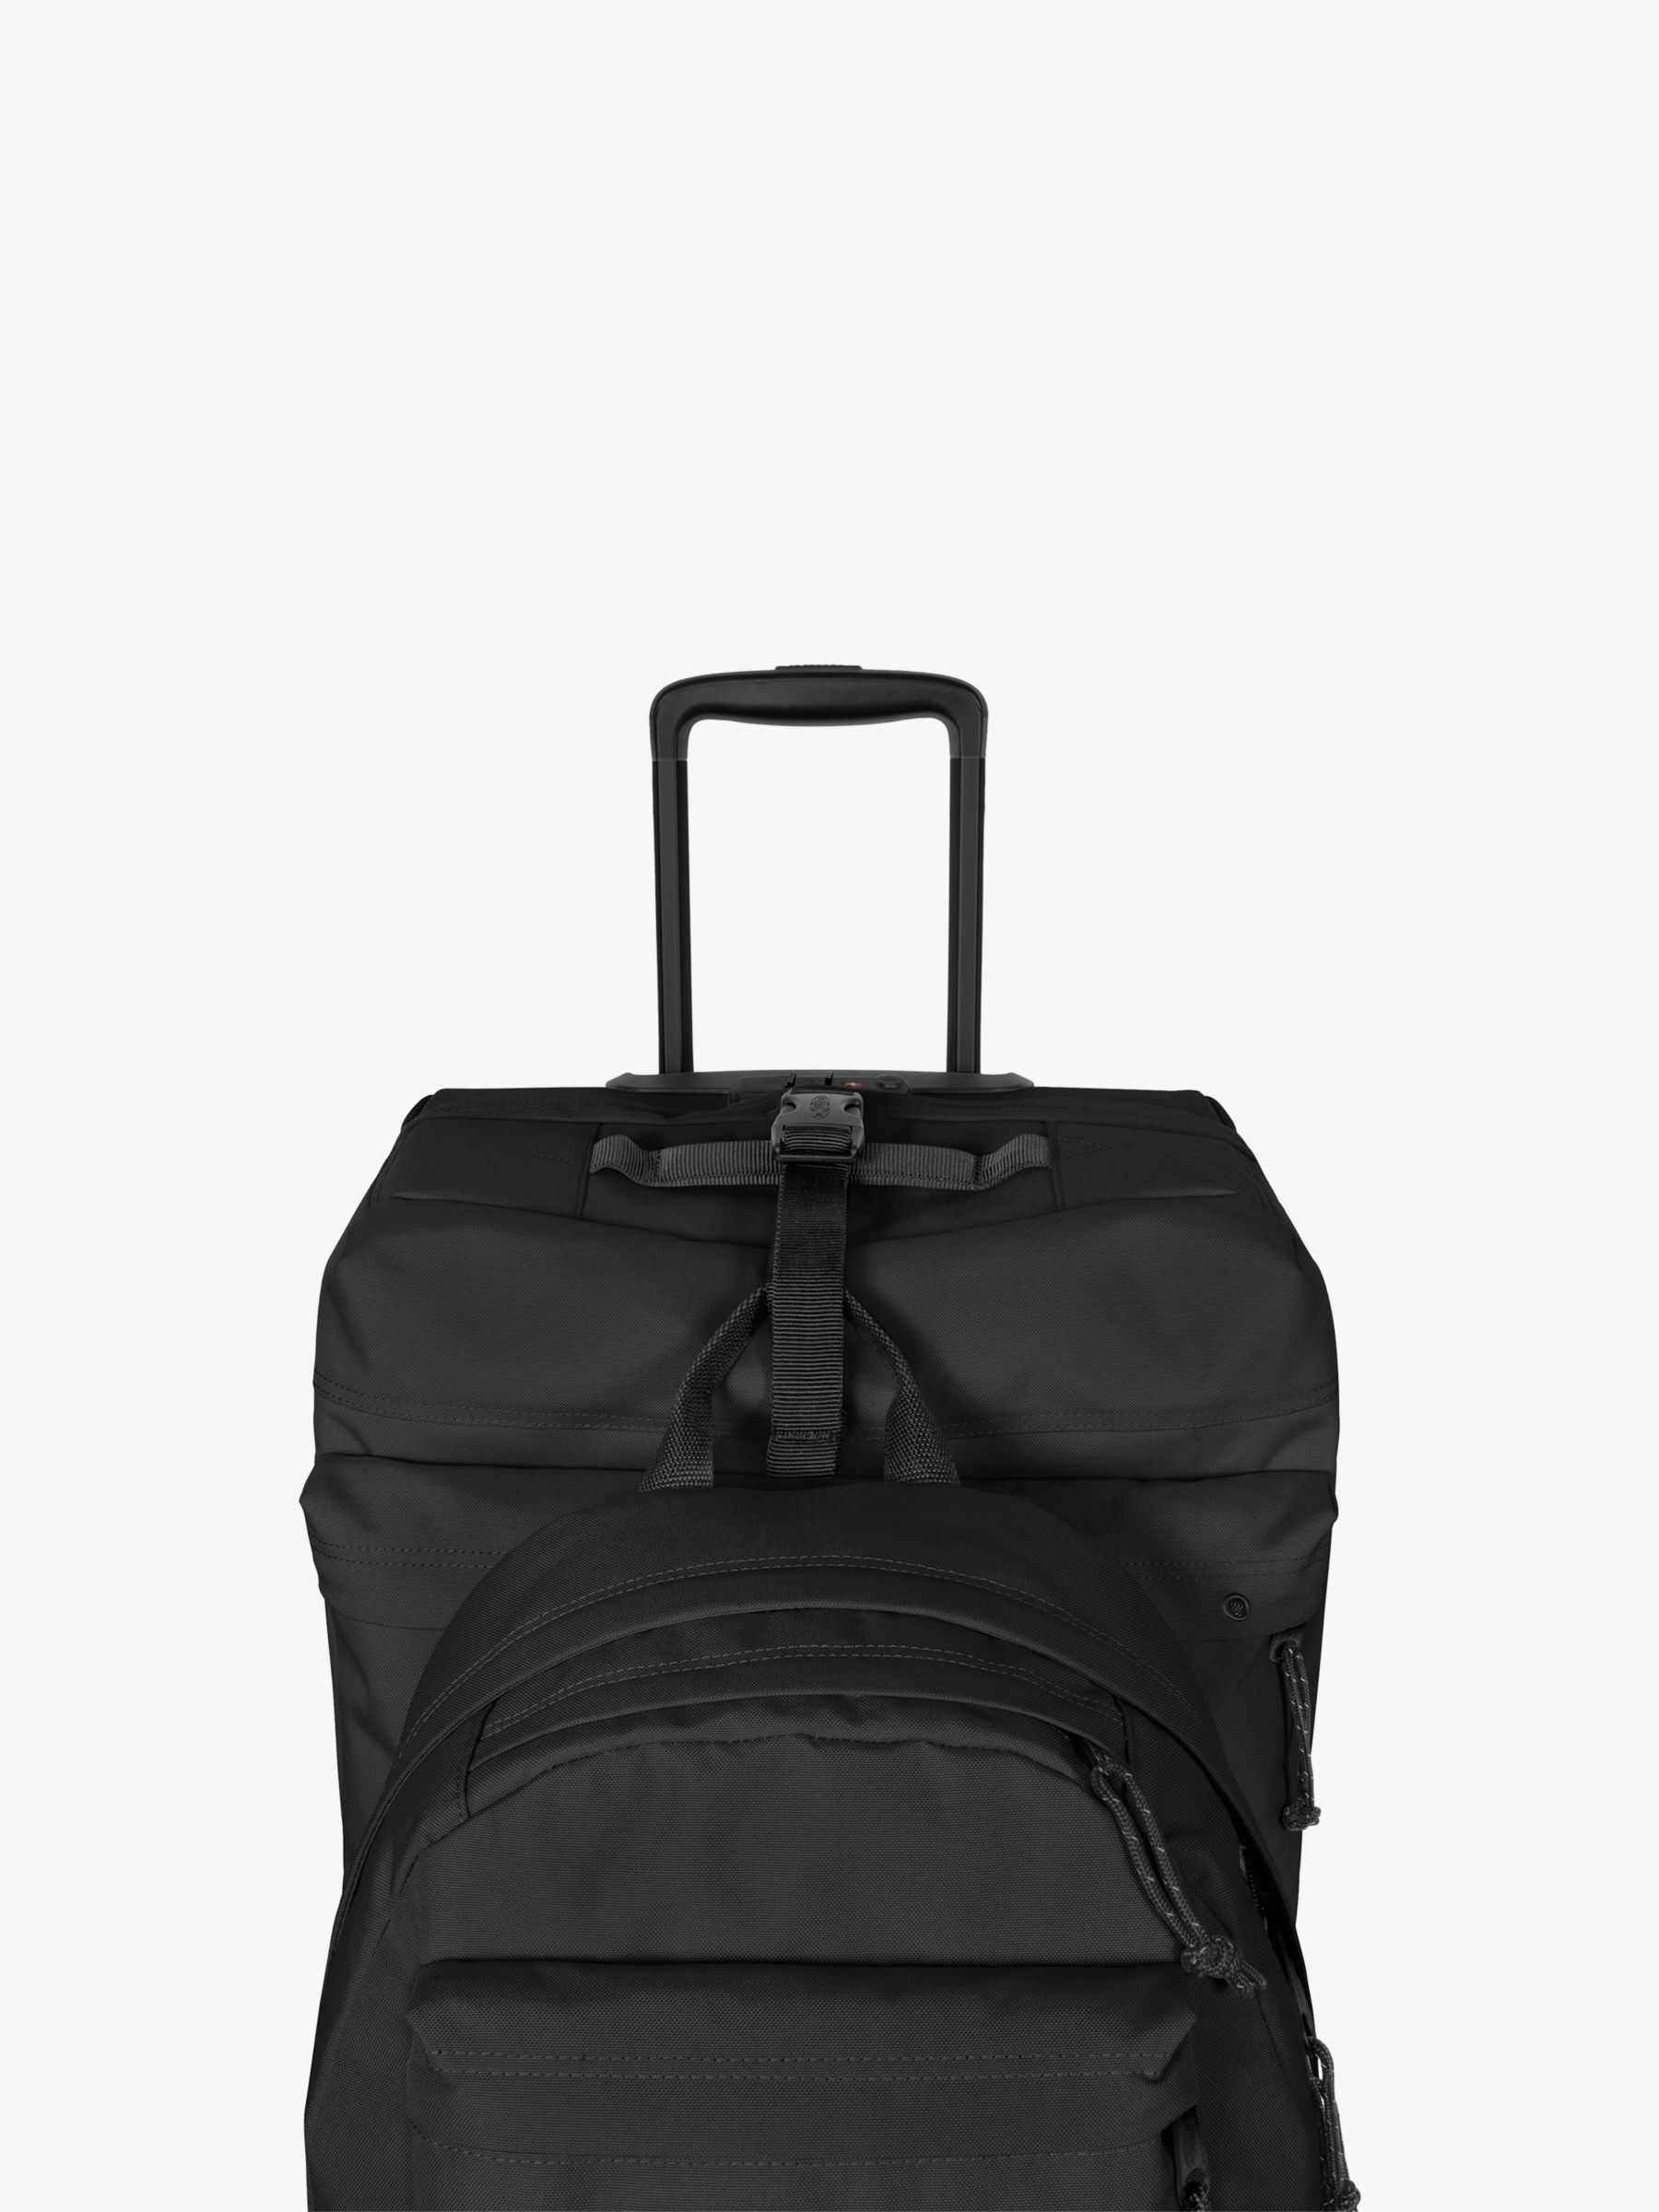 precedent Oom of meneer consultant Eastpak Double Tranverz 2-Wheel 67cm Medium Suitcase, Black